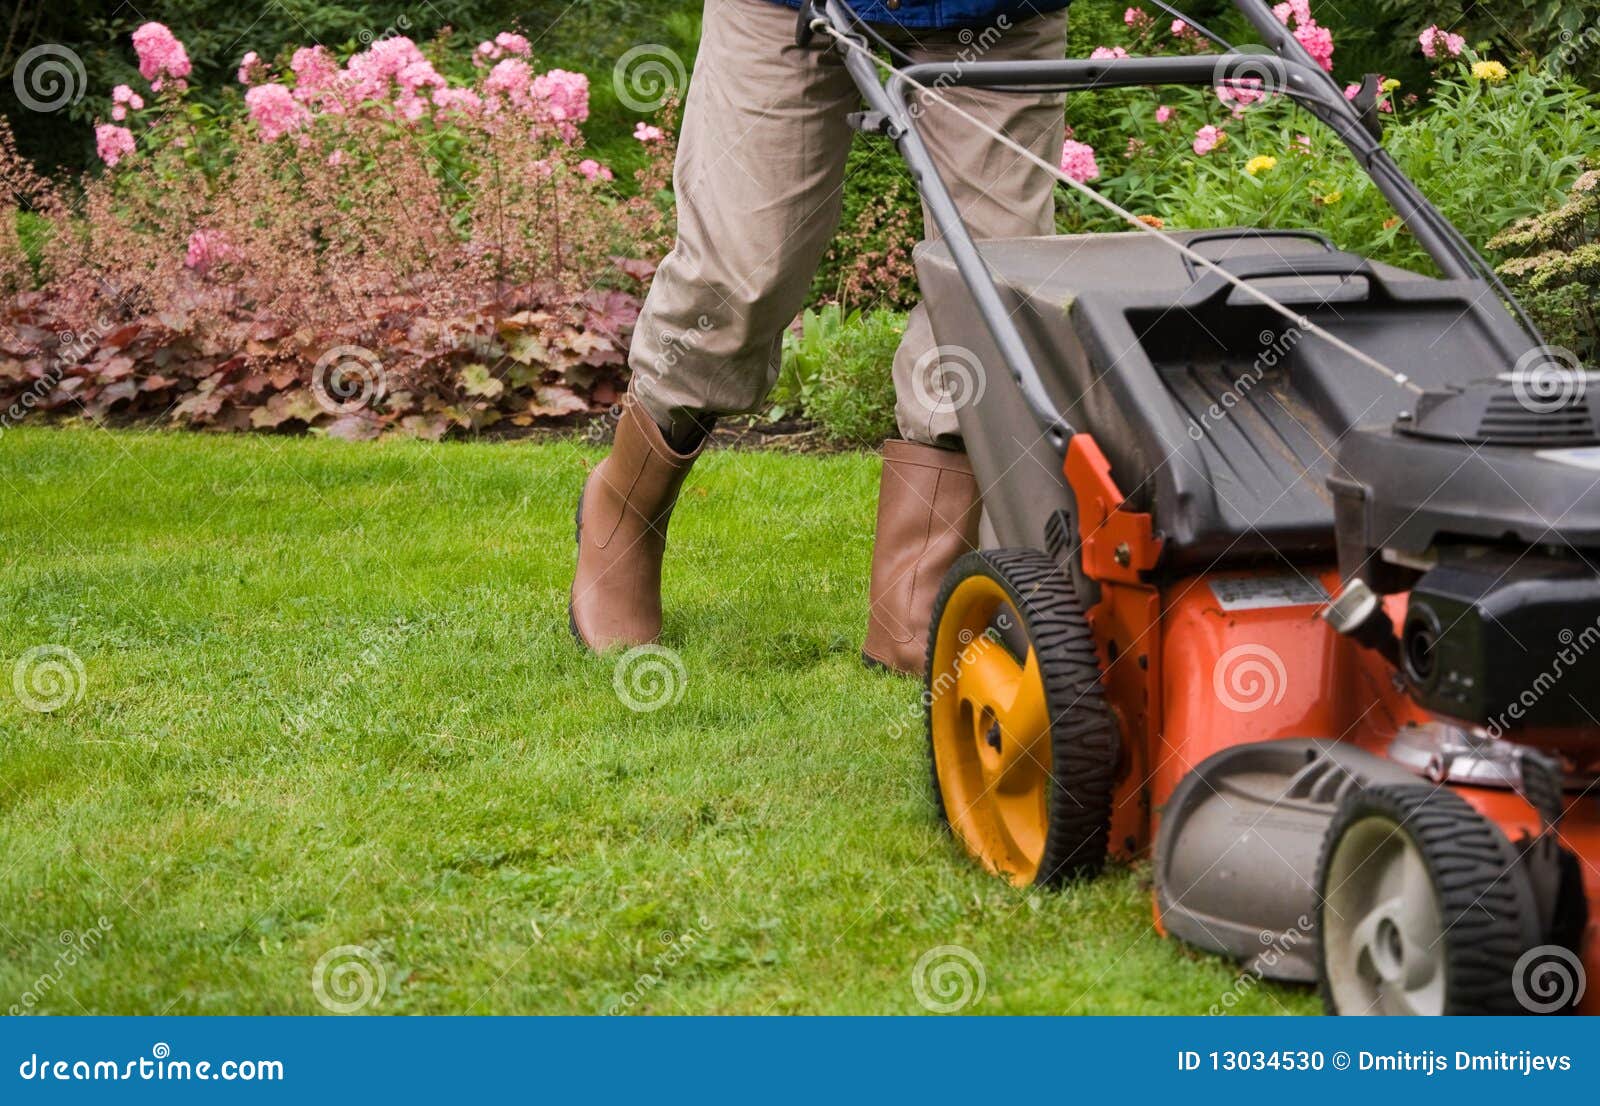 gardener mowing the lawn.